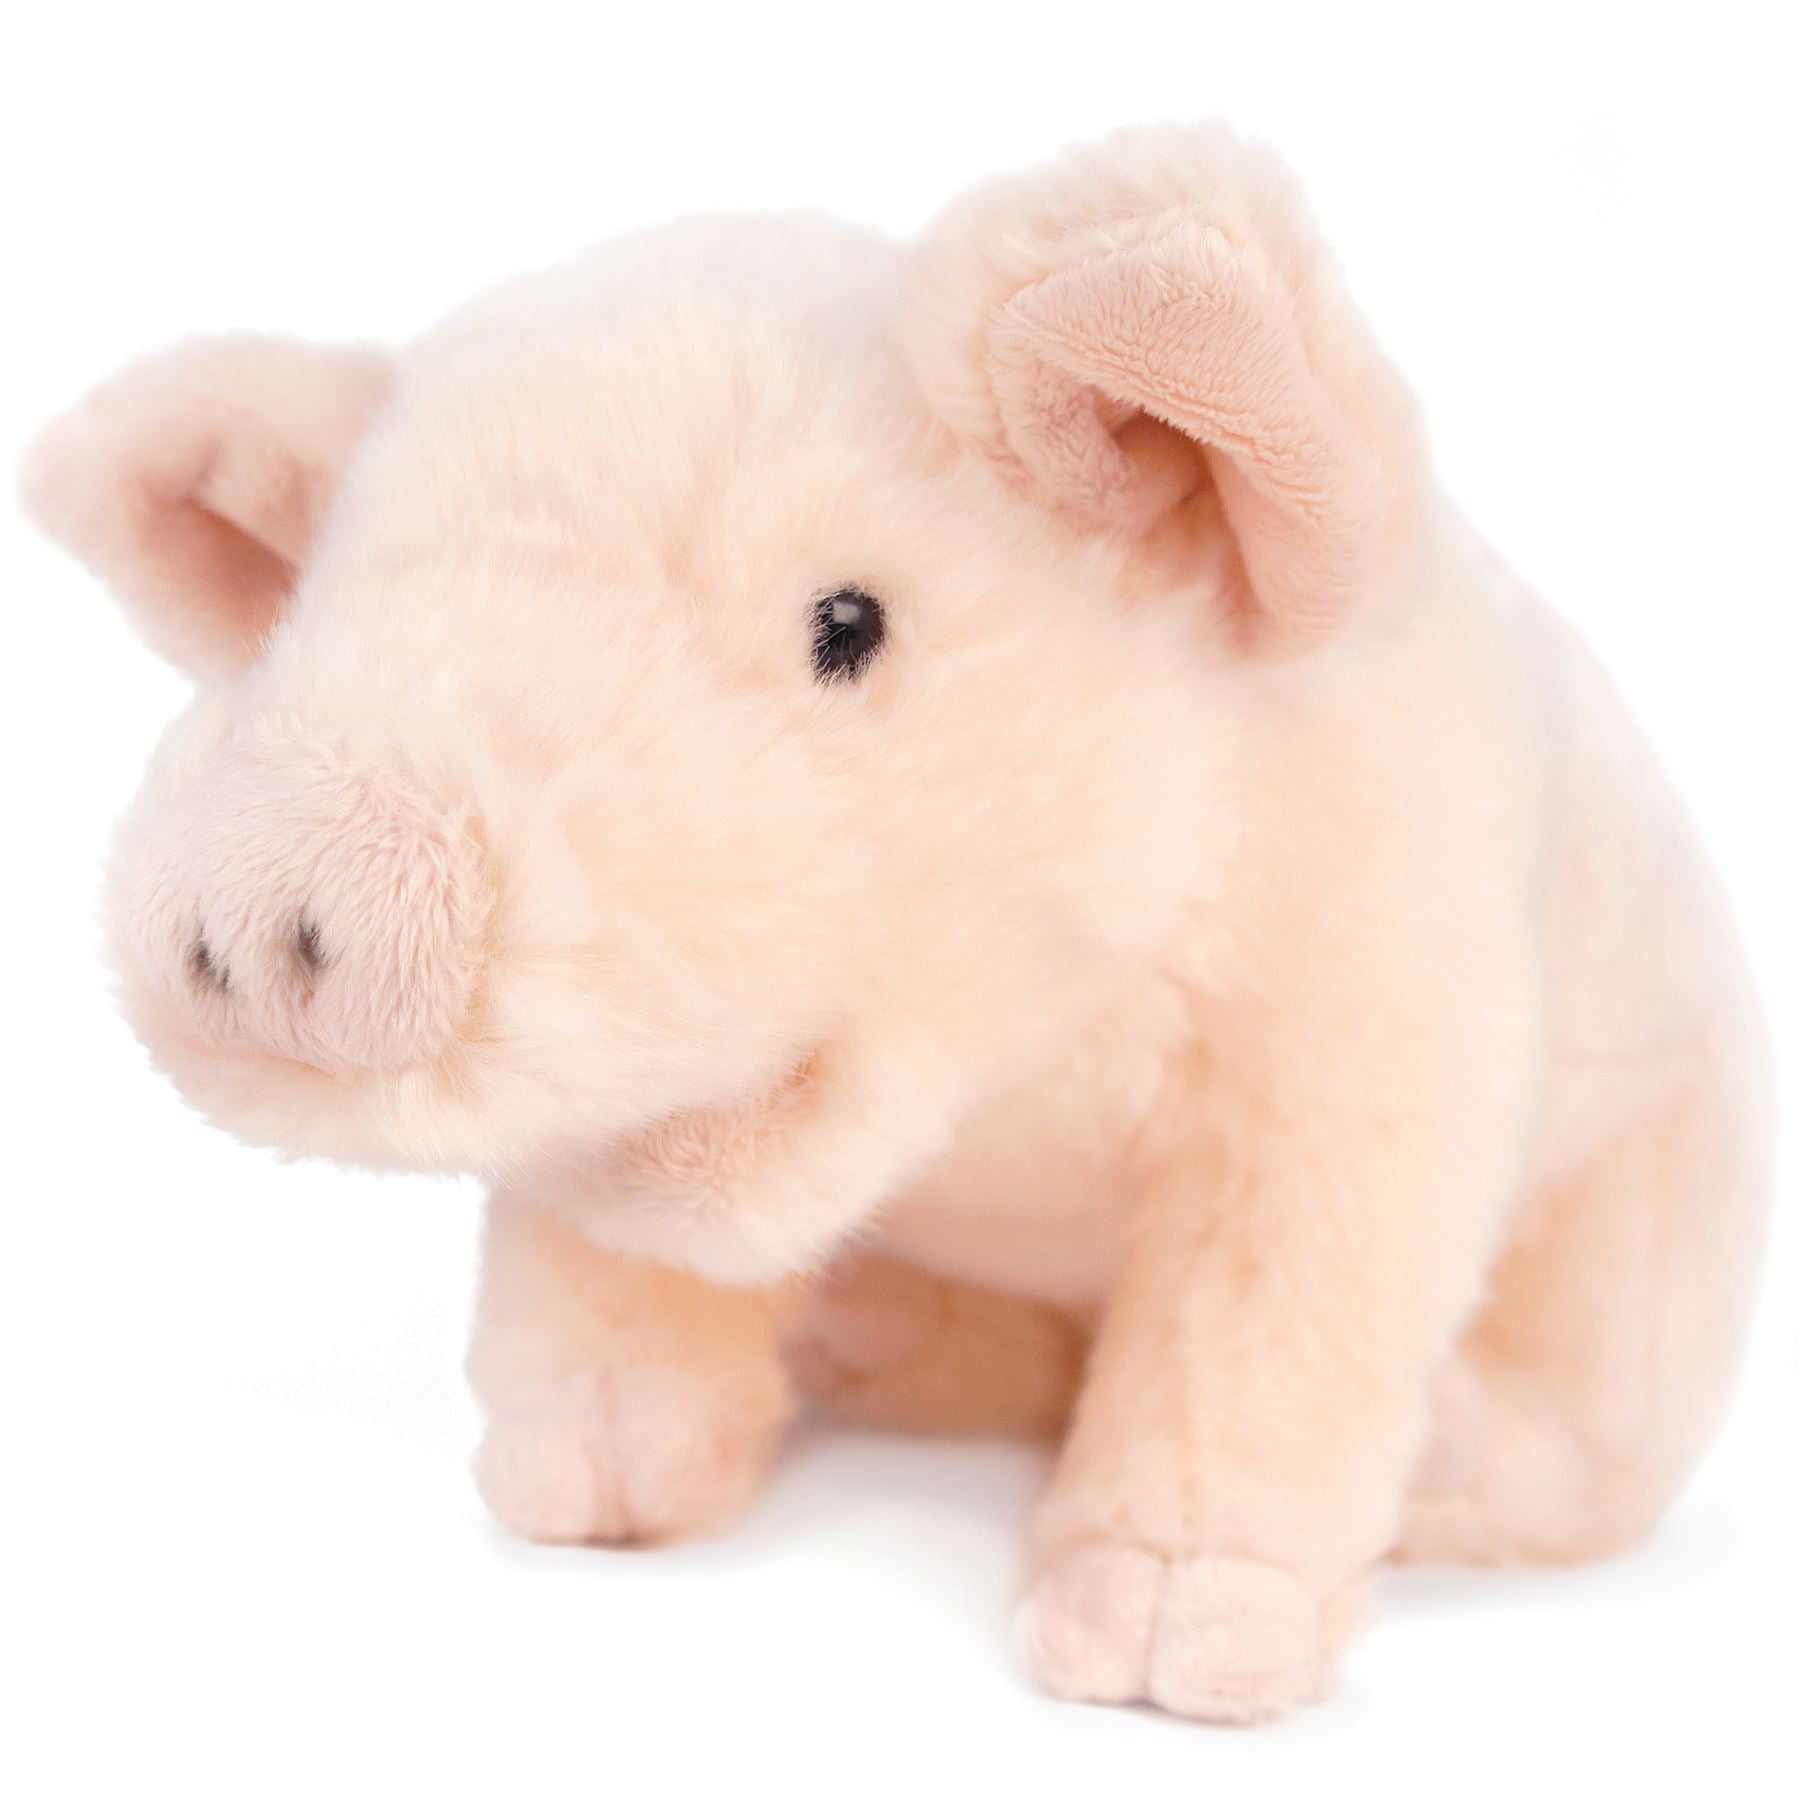 TheMogan Little Pig Pickles Piglet Farm Plush Stuffed Animal Toy Kids Gift 8" 